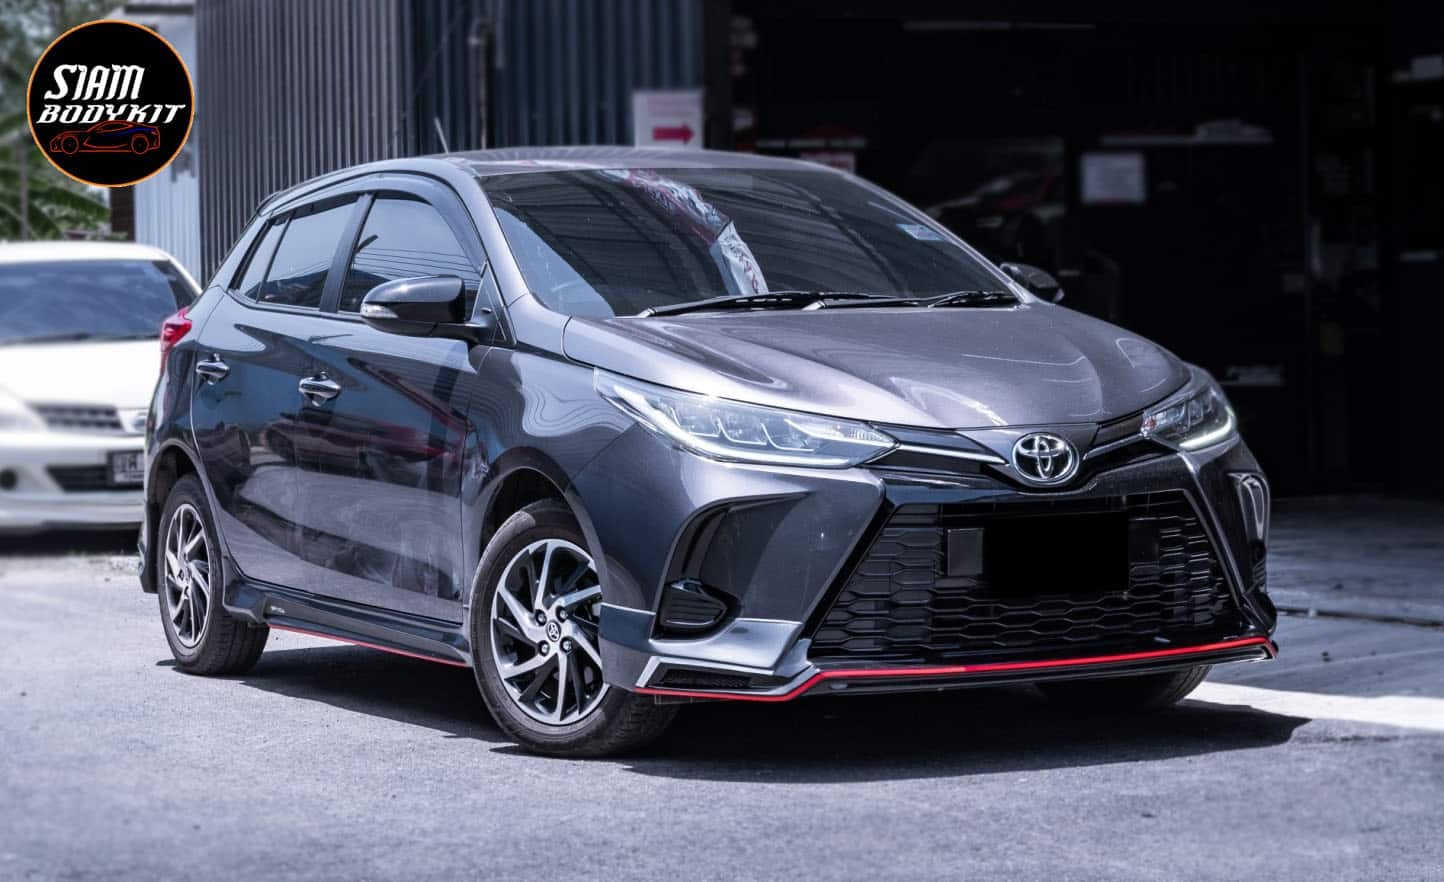 Space V2 Bodykit for Toyota Yaris Hatchback 2020-2021 (COLOR)